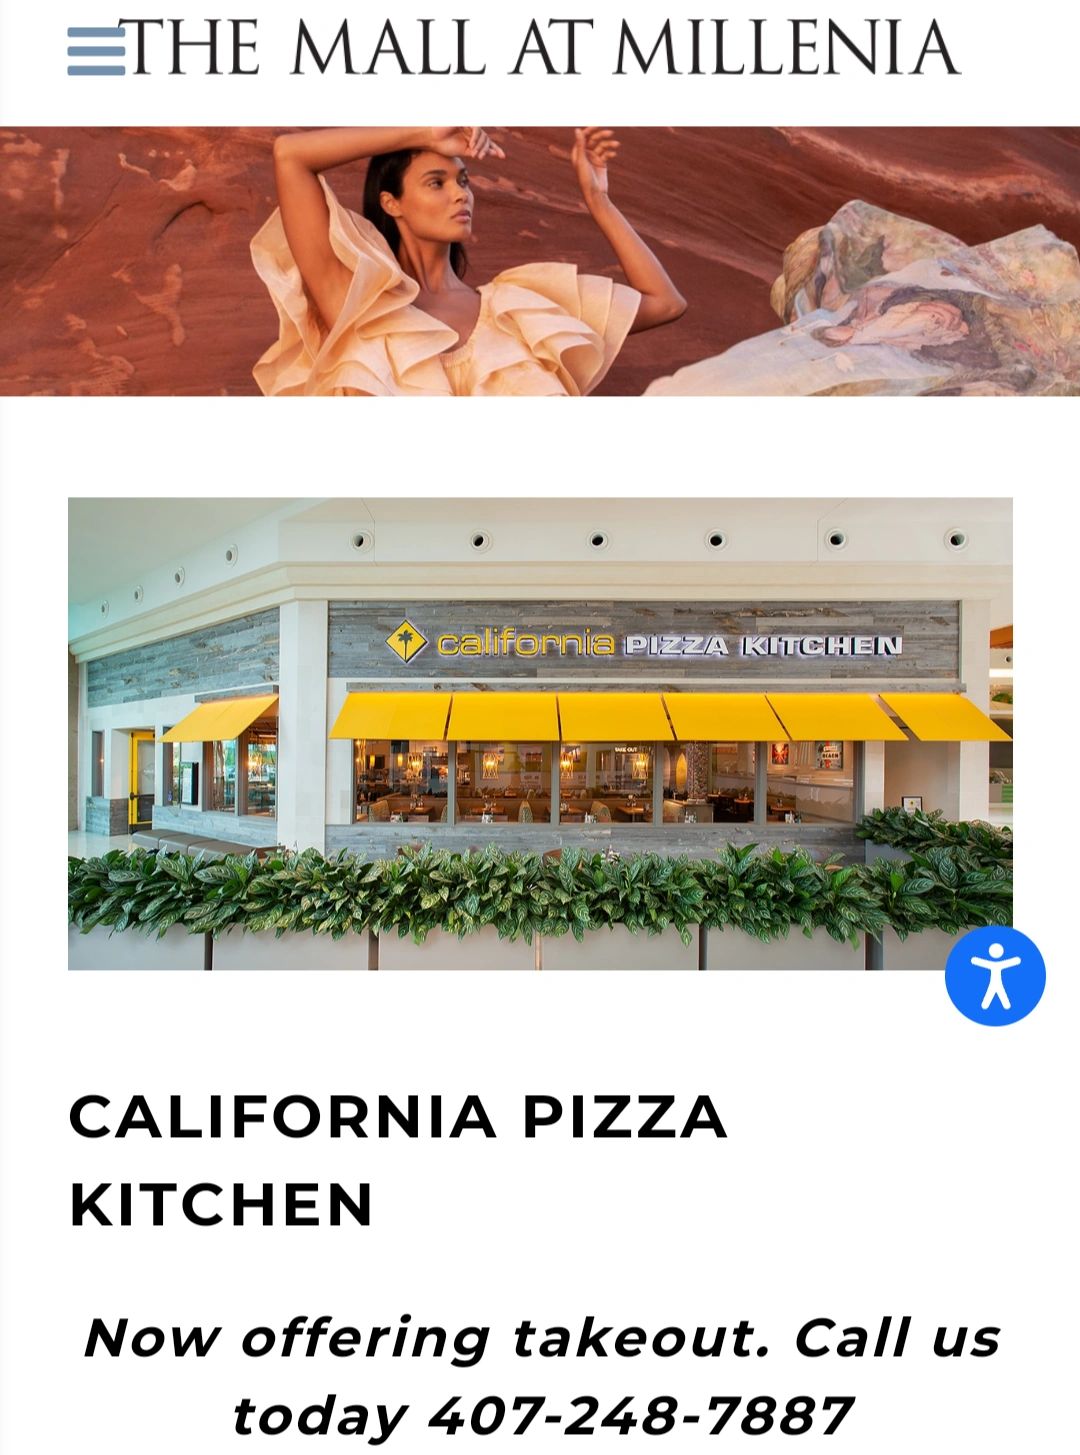 Orlando Fashion Week California Pizza Kitchen sponsor